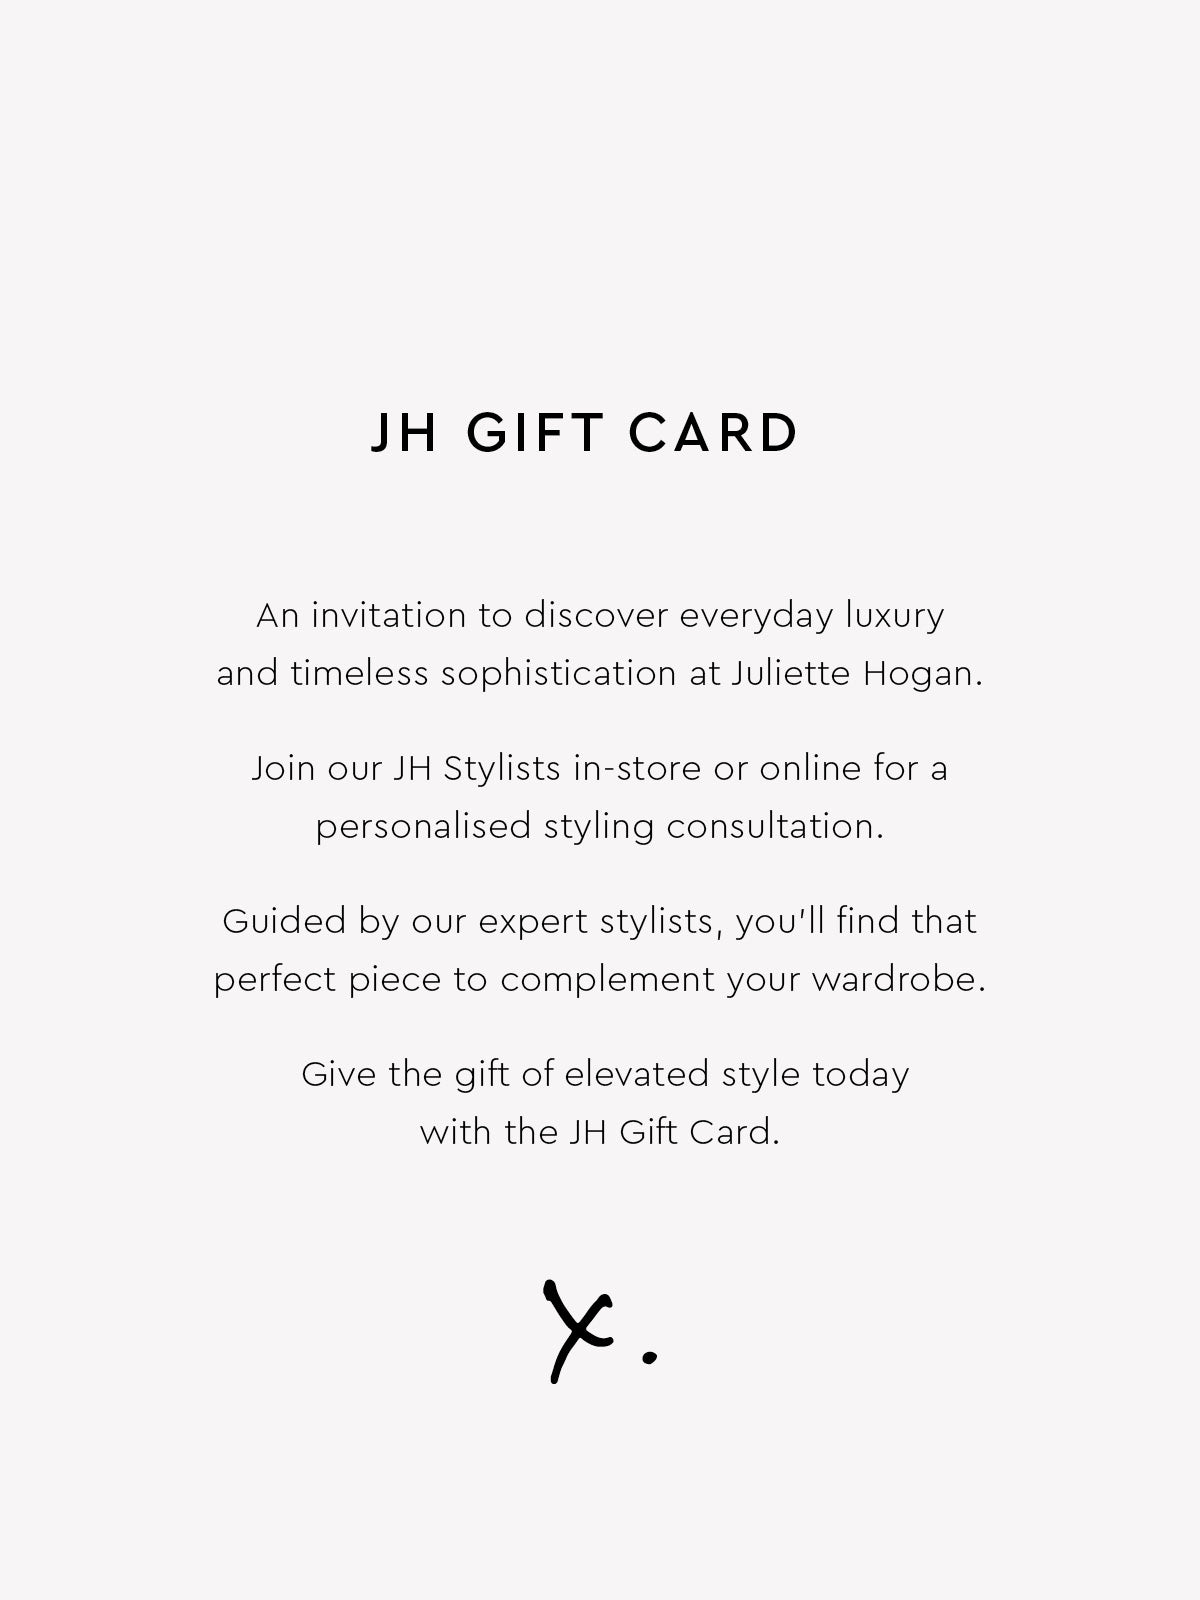 JH $100 Gift Card